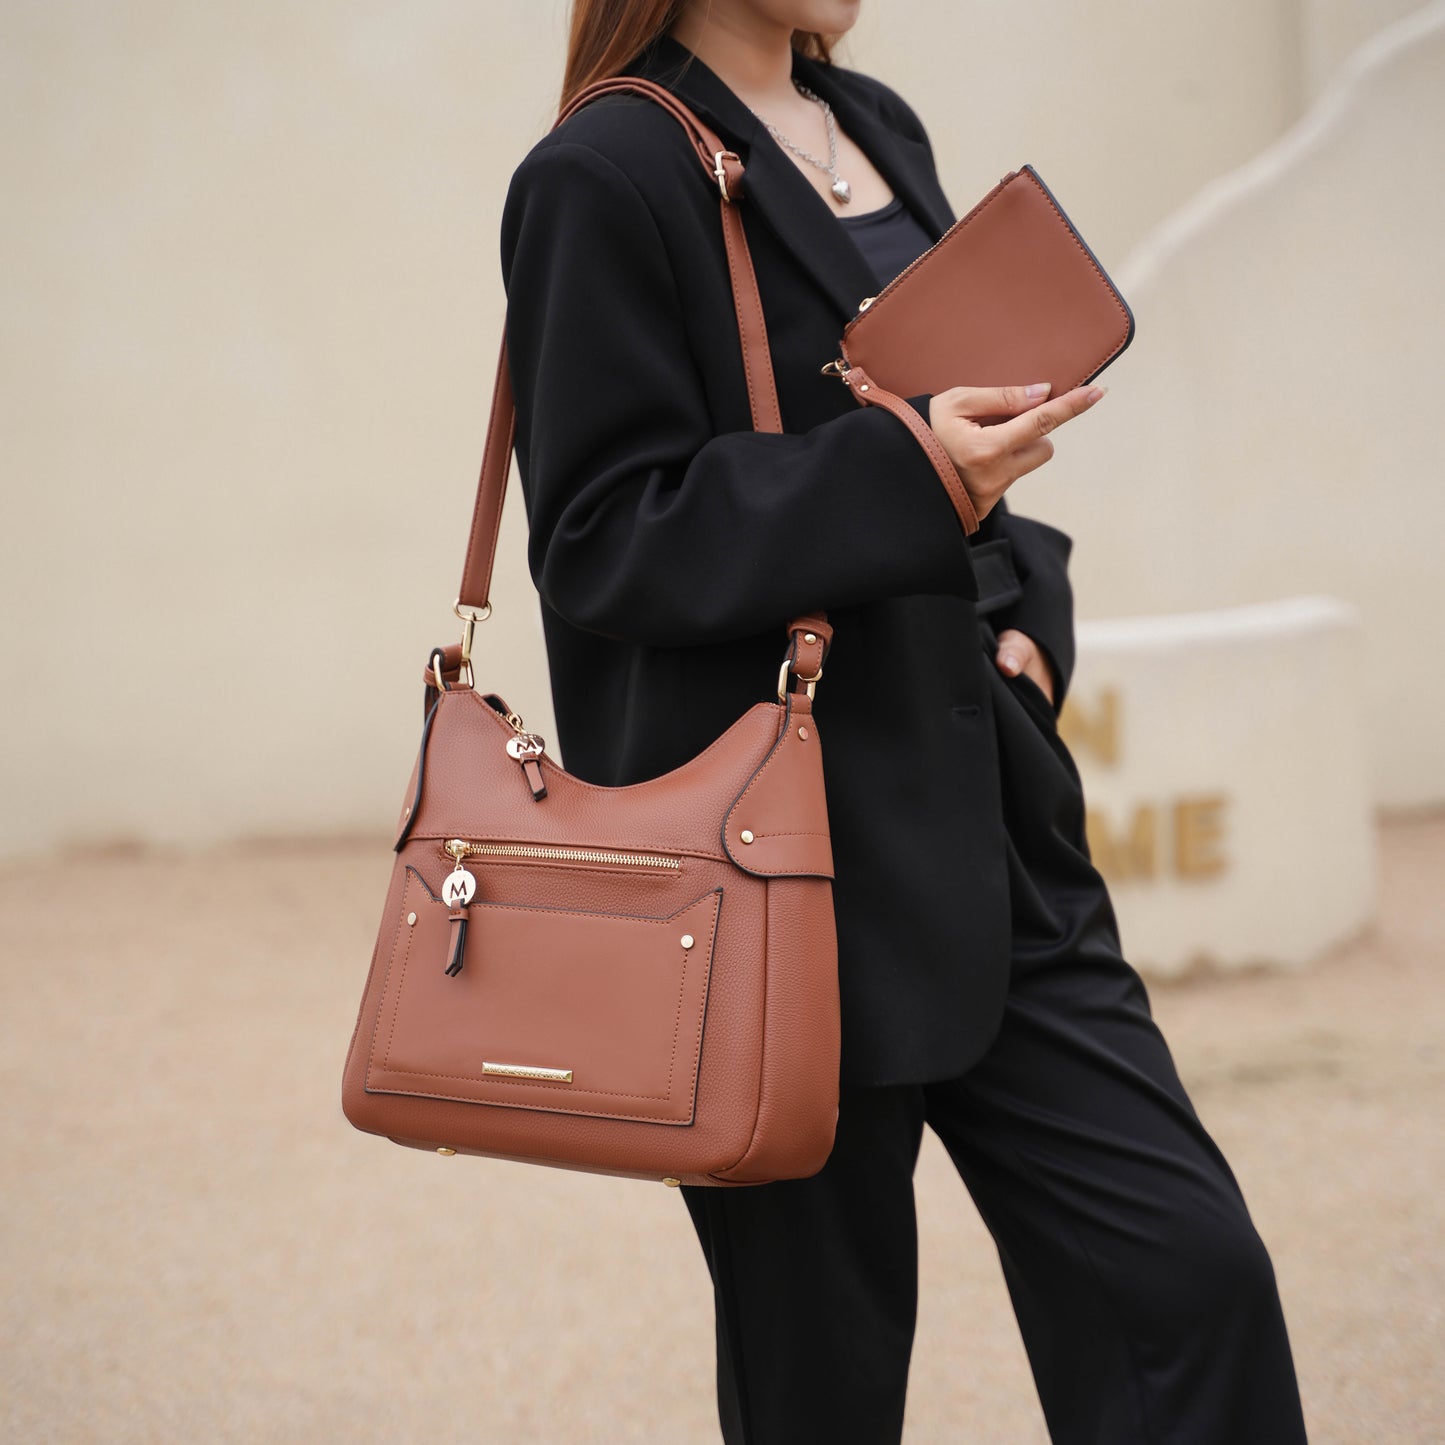 Maeve Vegan Leather Women’s Shoulder Bag with Wristlet Pouch